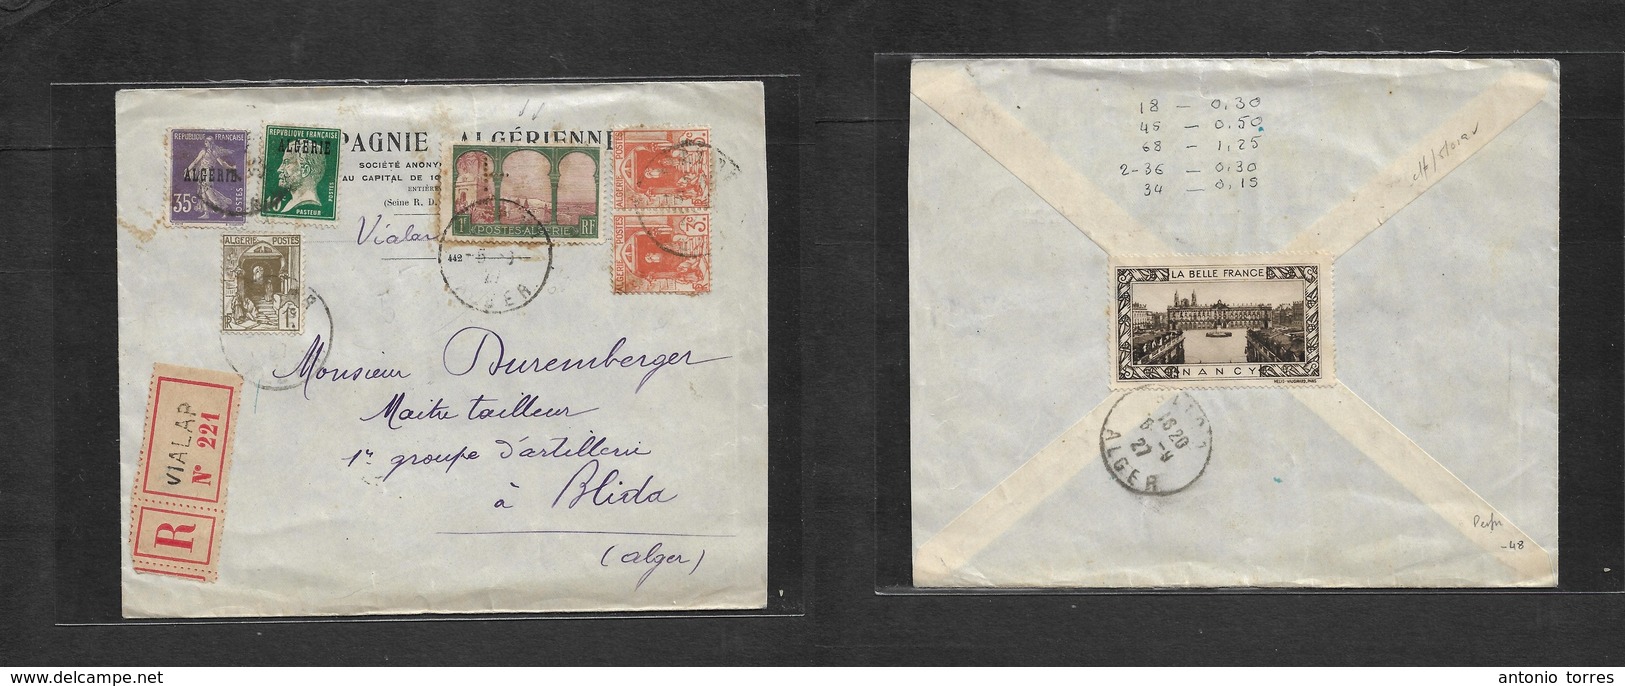 Algeria. 1927 (5 Sept)  Vialap - Blida. PERFIN Stamp Comercial Usage Ovptd Issue + Mixed. Registered Multifkd Envelope.  - Argelia (1962-...)